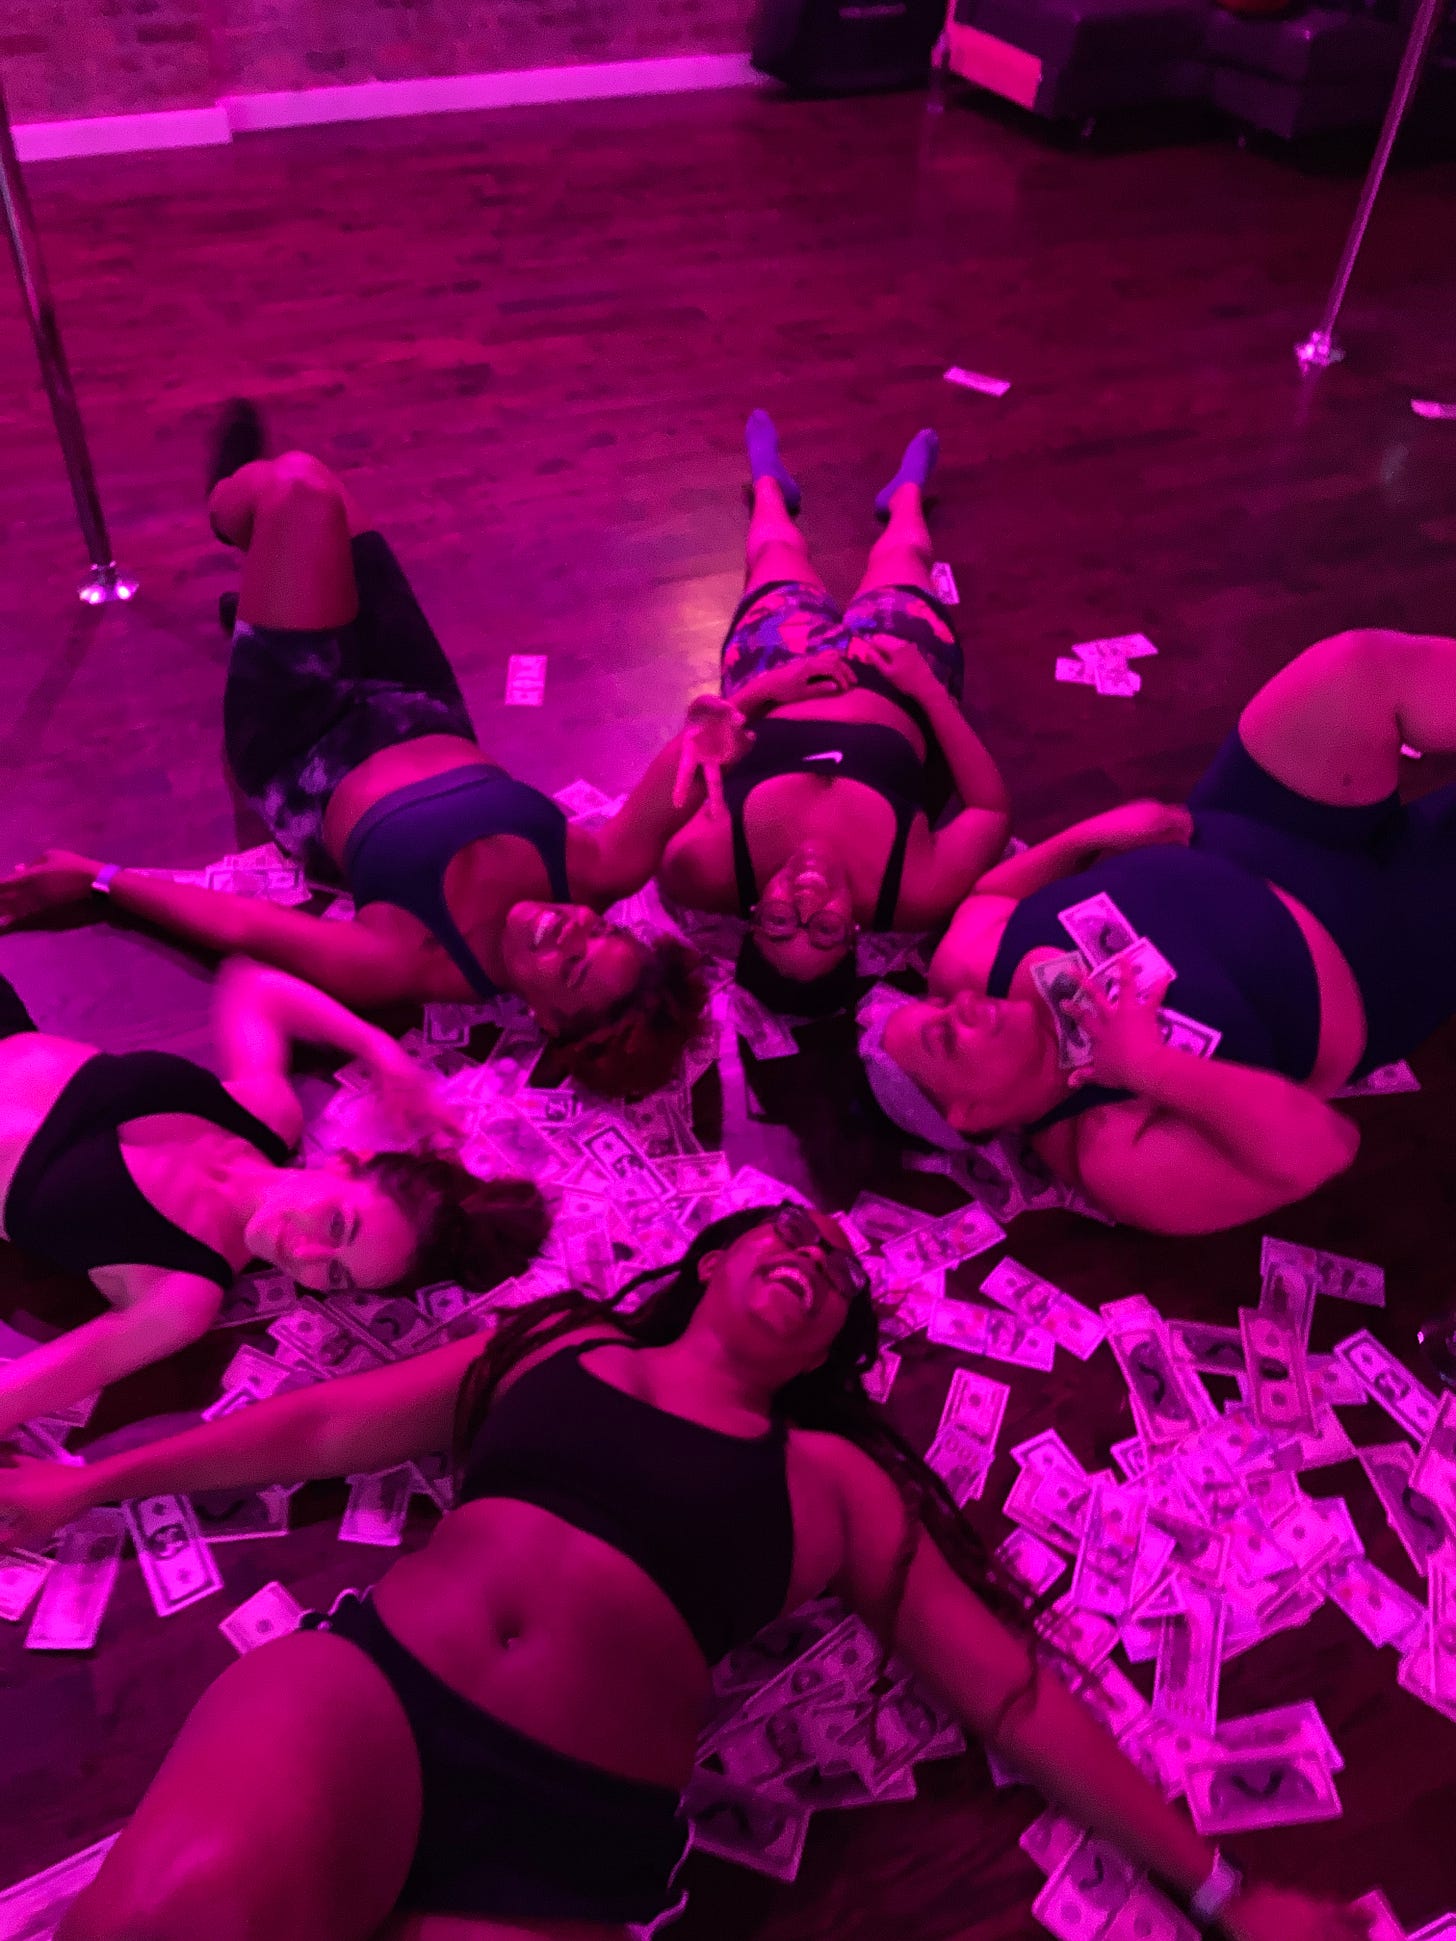 Five women lying on top of fake money on a hardwood floor at a pole studio.